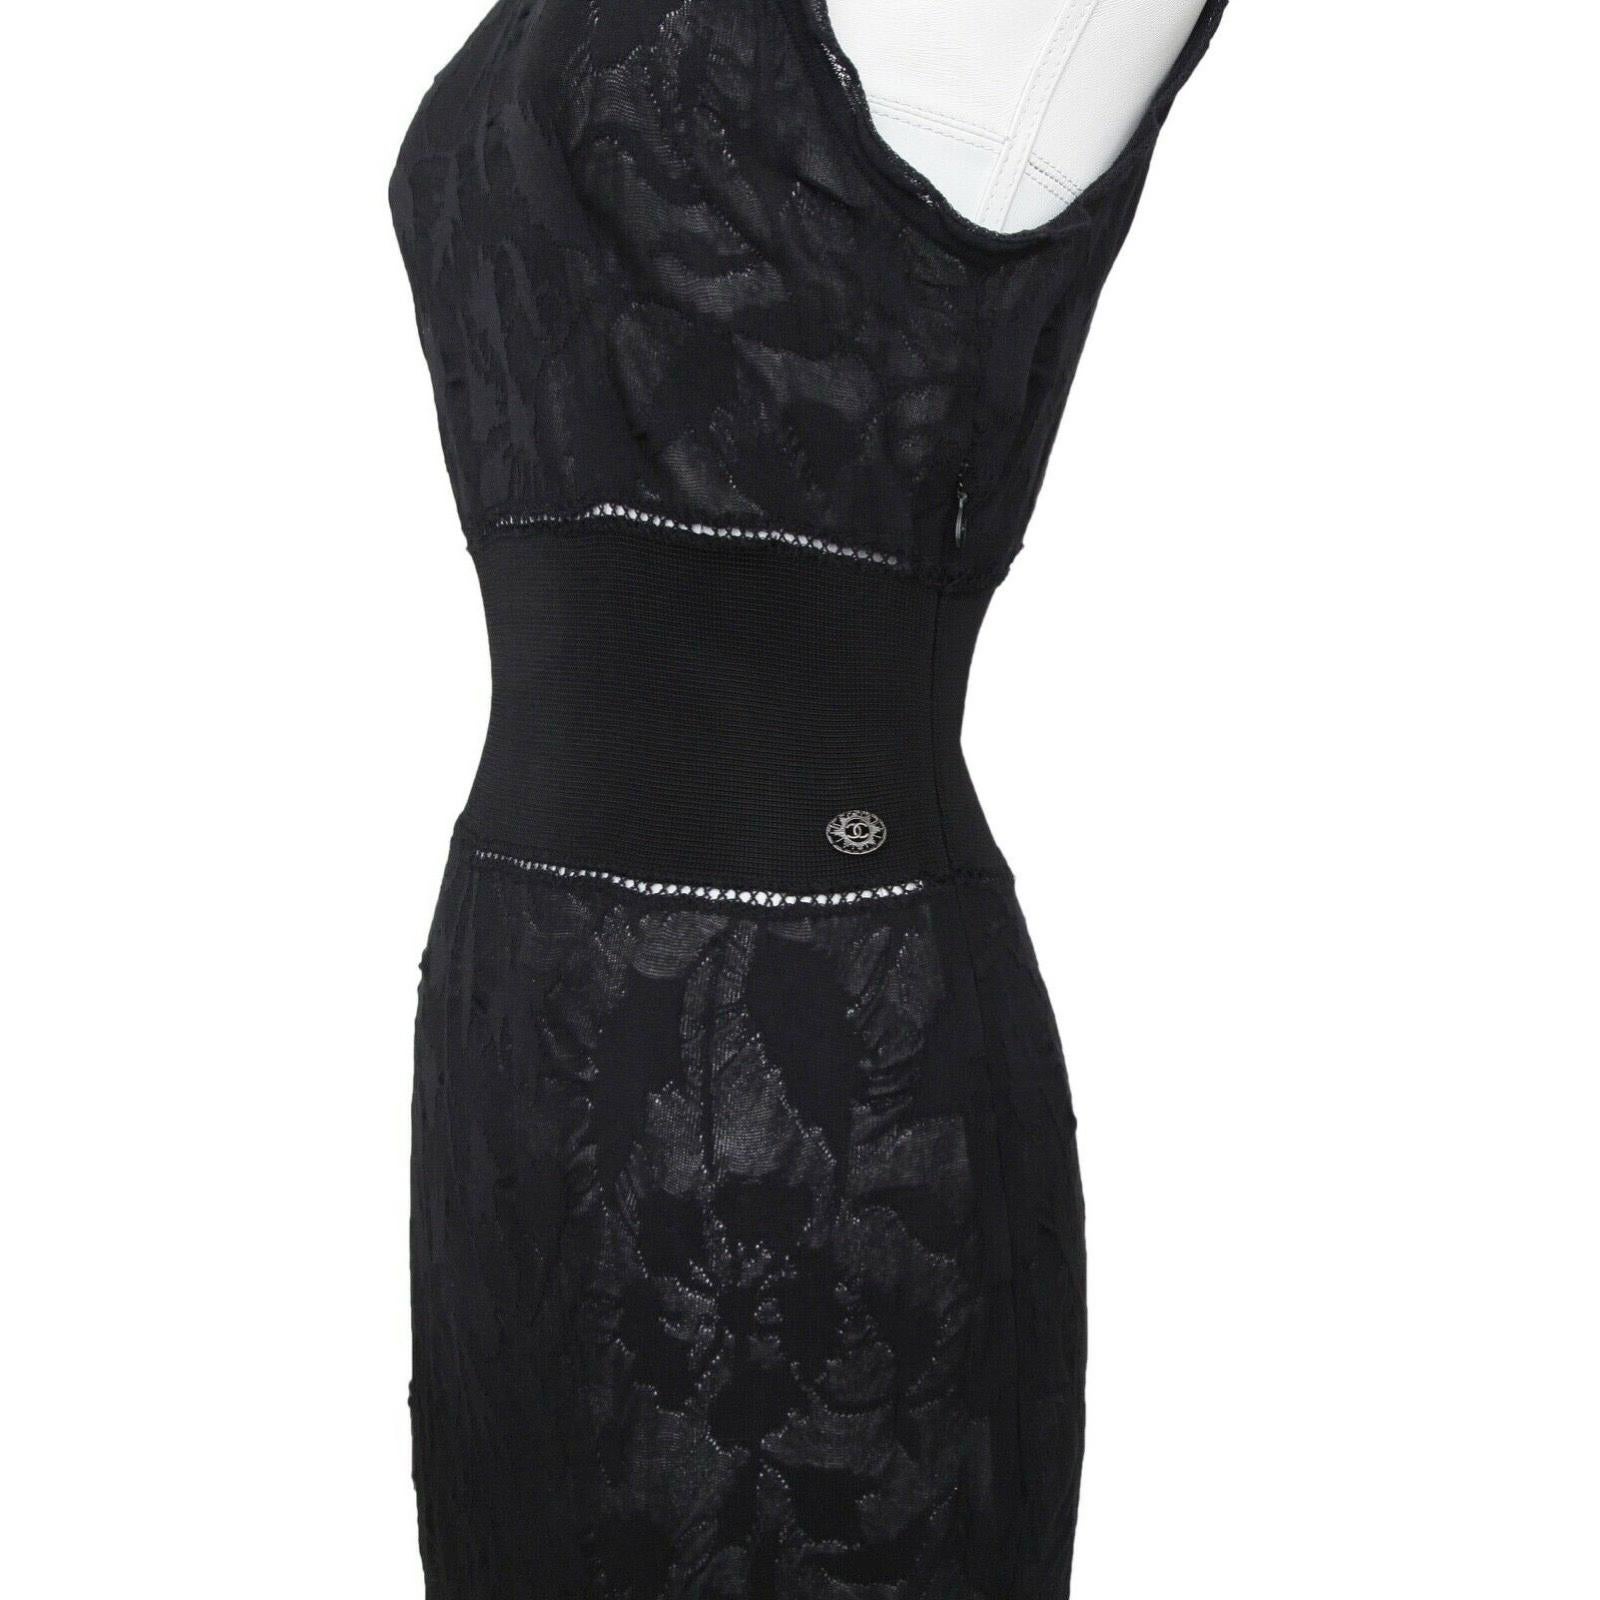 CHANEL Black Long Knit Dress Maxi Floral Sz 38 Spring 2011 11P 1